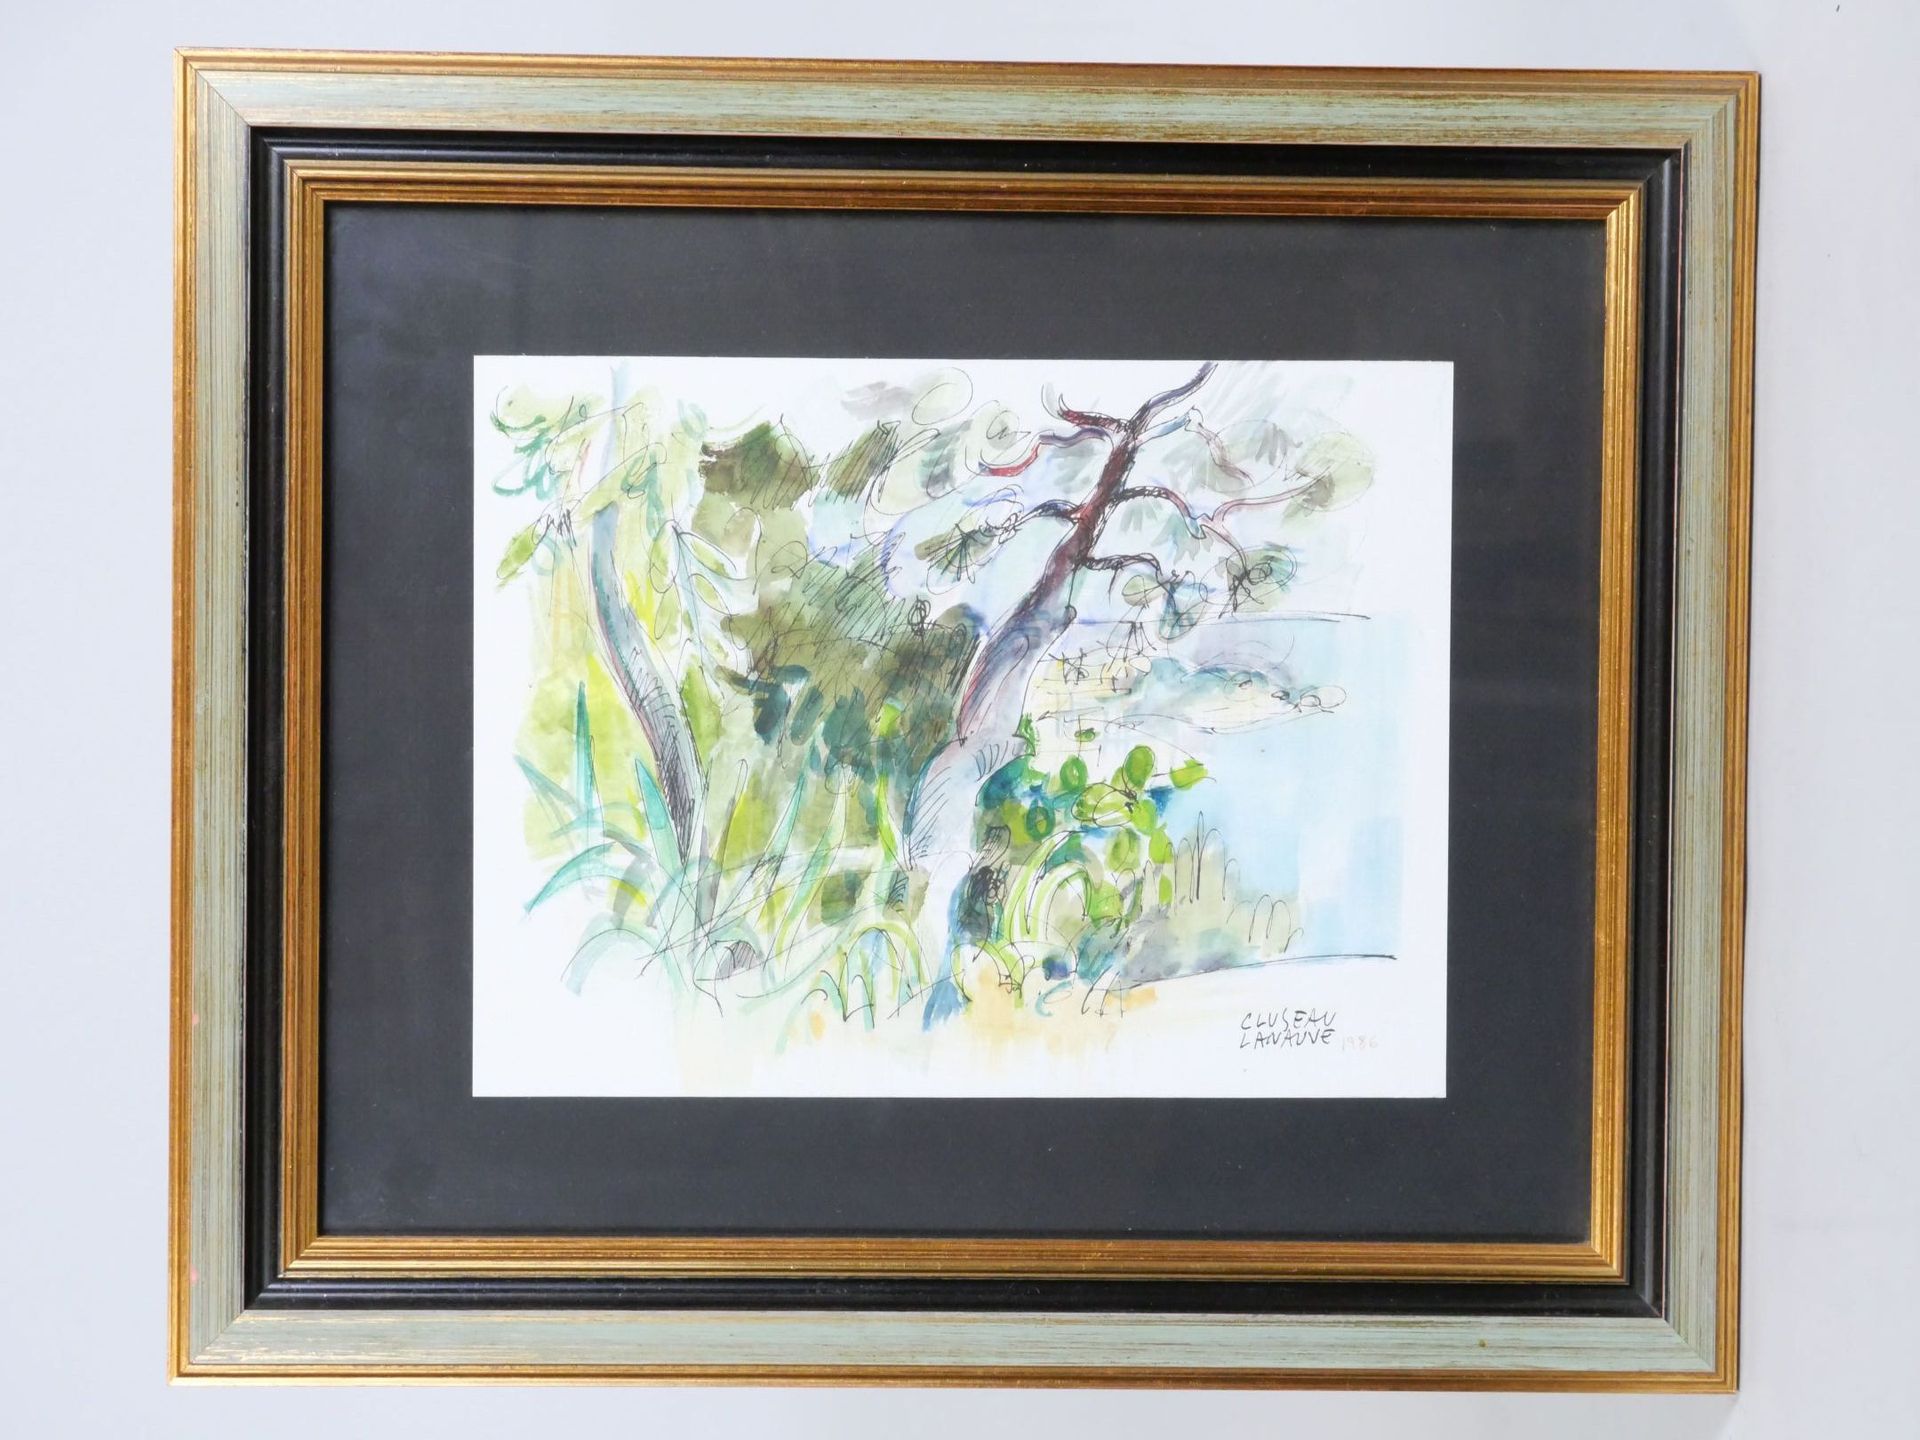 Null 让-克鲁索-拉诺夫 (1914-1997)
树木
水彩画，右下角有签名，日期为1986年
尺寸：18 x 24 cm
带框架的尺寸：32 x 38厘米&hellip;